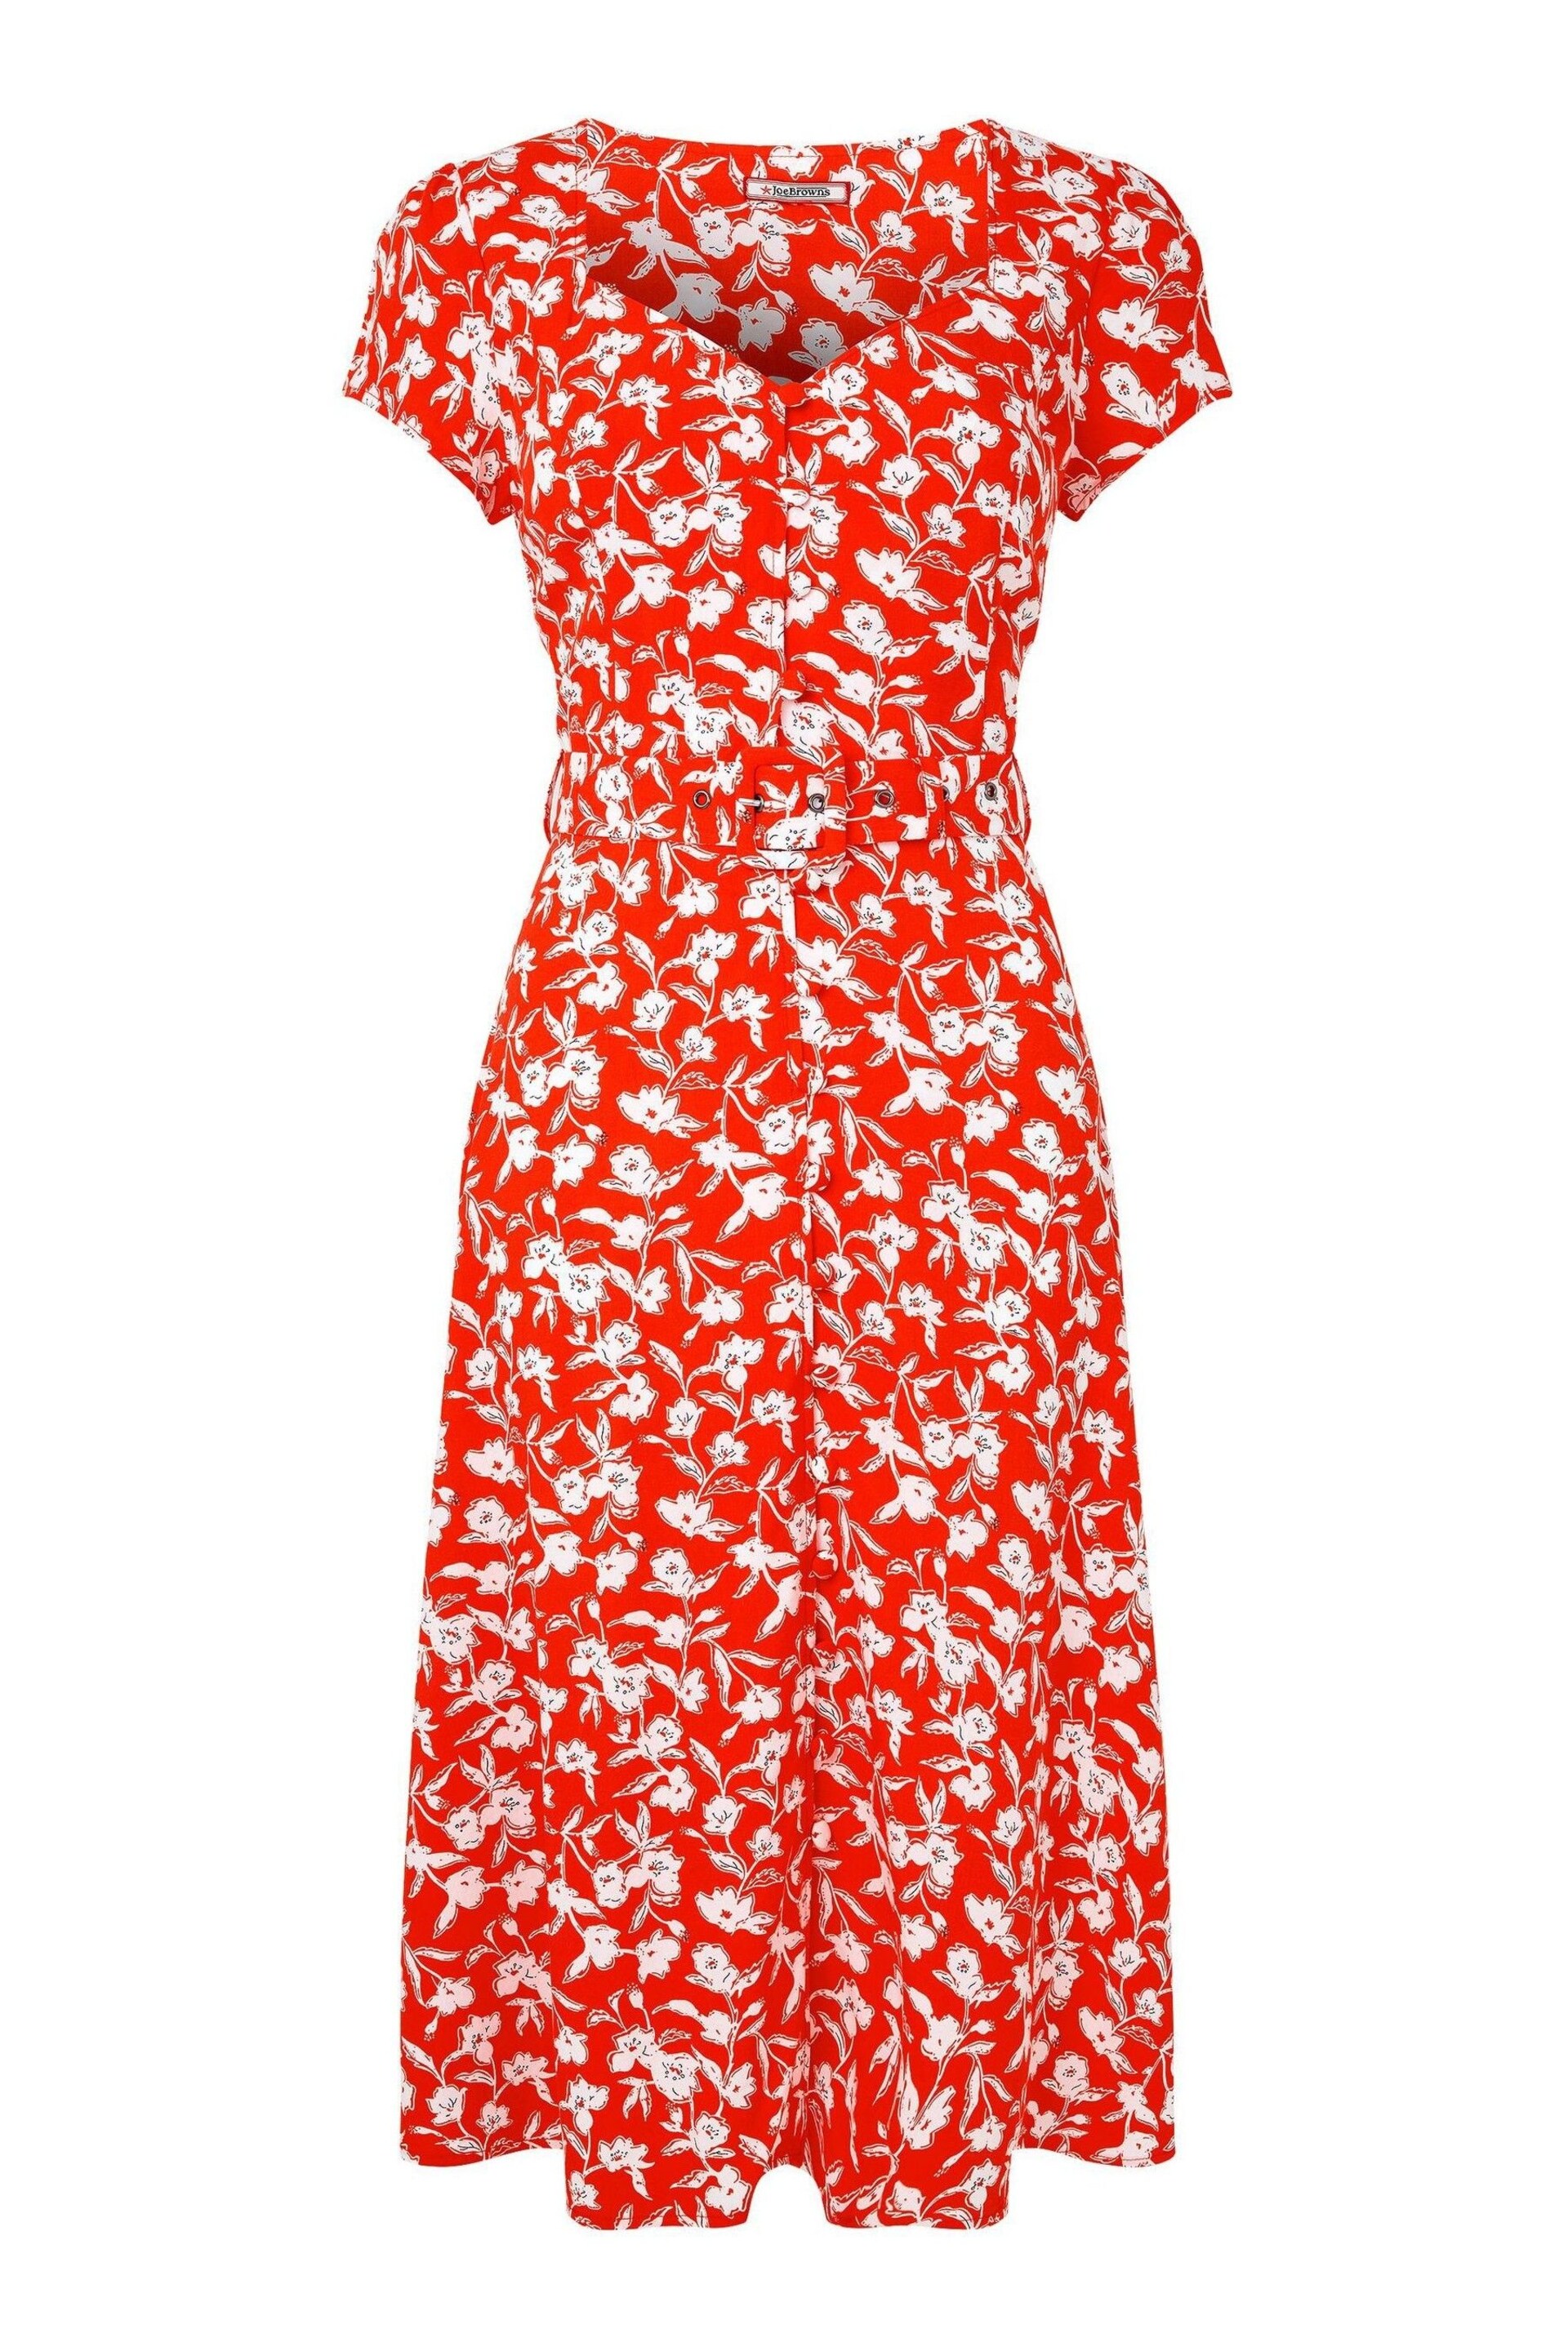 Joe Browns Red Floral Belted Crinkle Dress - Image 5 of 5